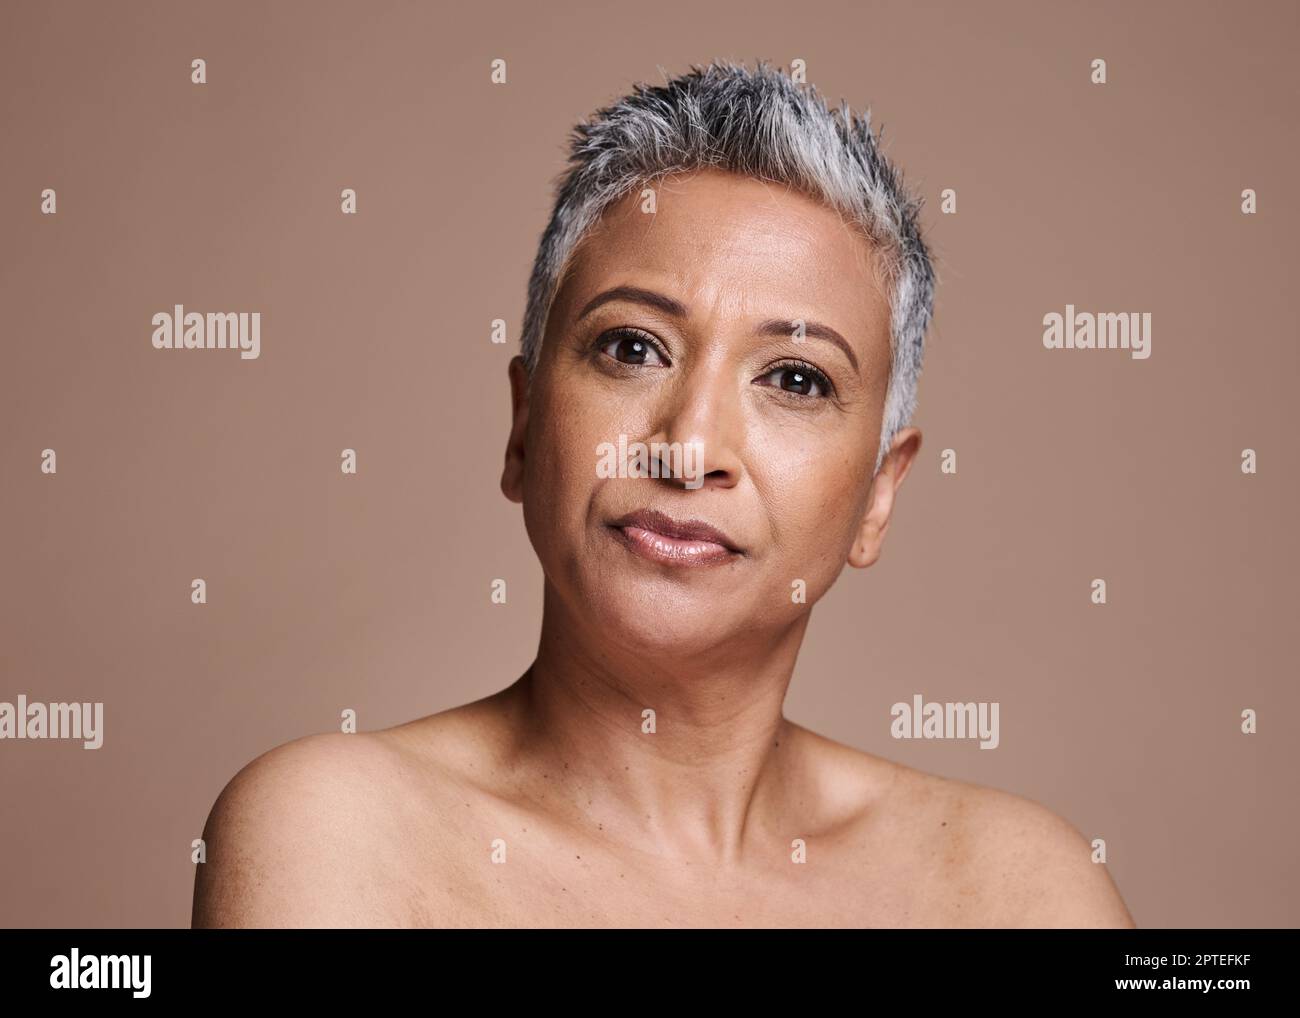 Stuido Portrait Of Serious Senior Woman Stock Photo, Picture and